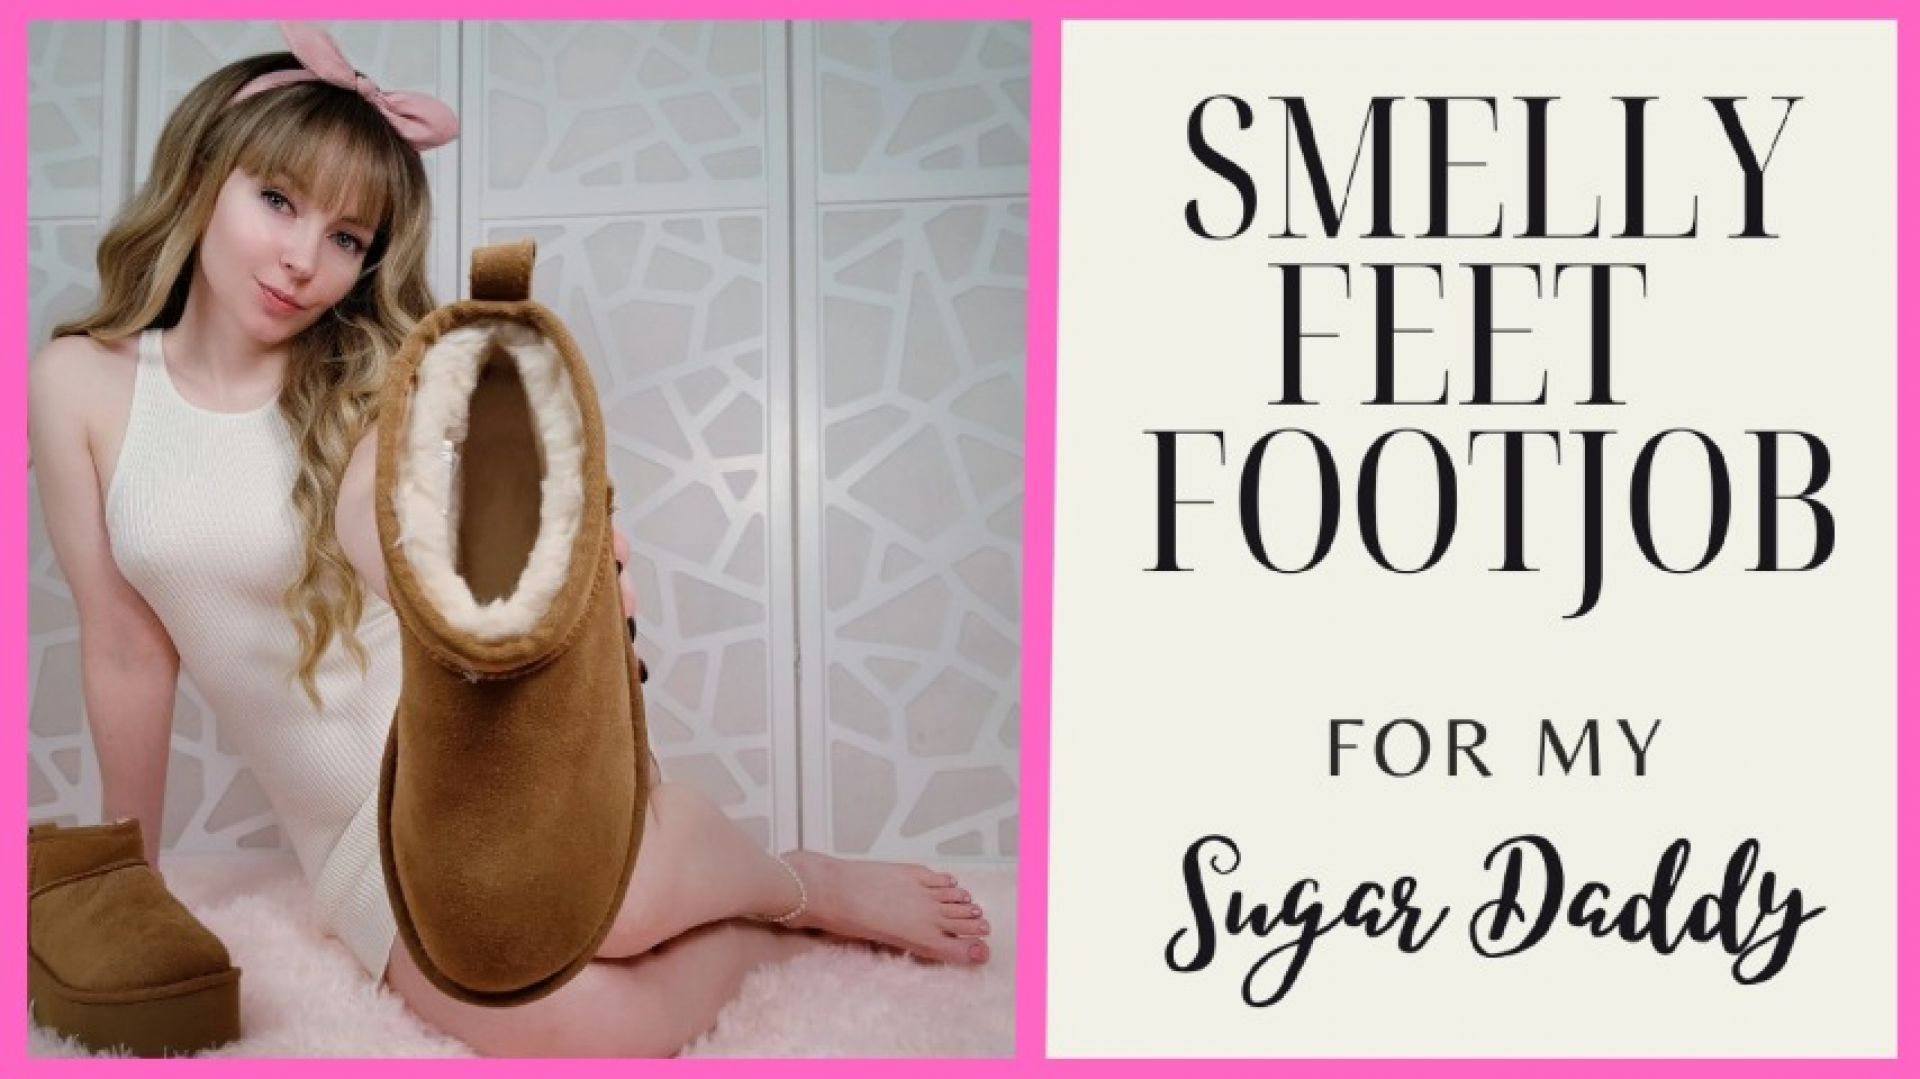 Smelly Footjob for My Sugardaddy